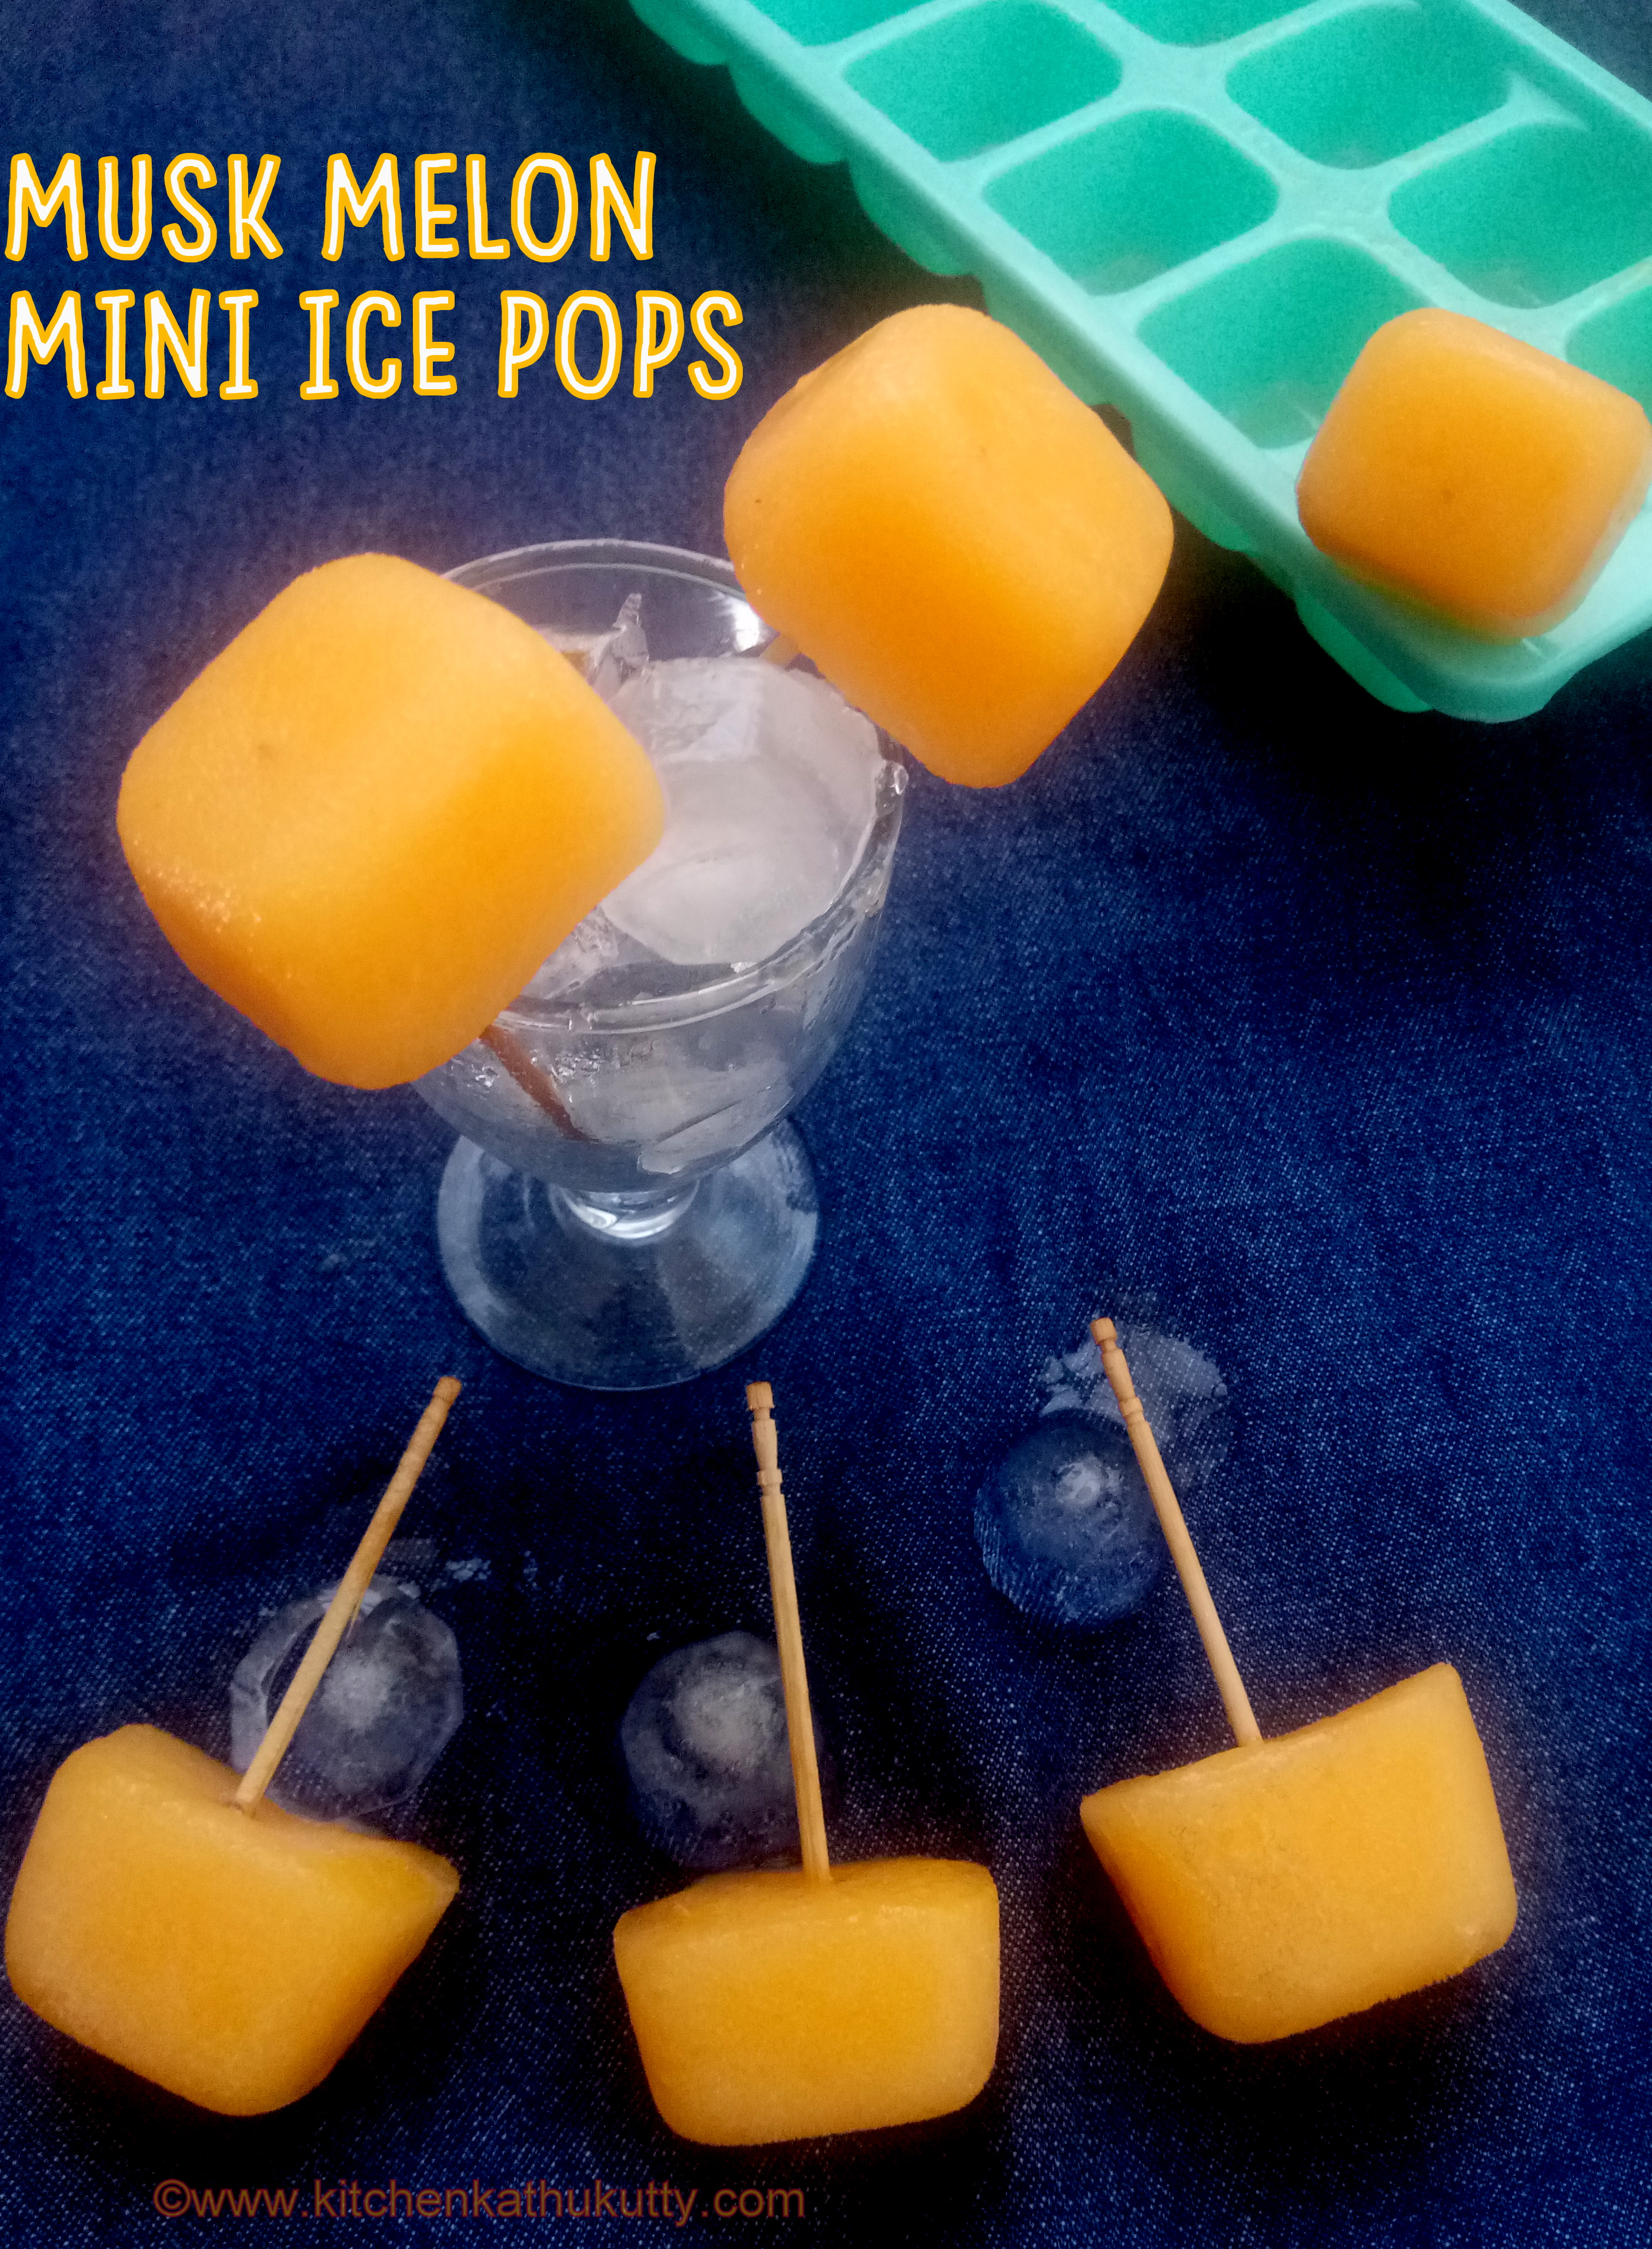 MUSK MELON ICE POPS RECIPE